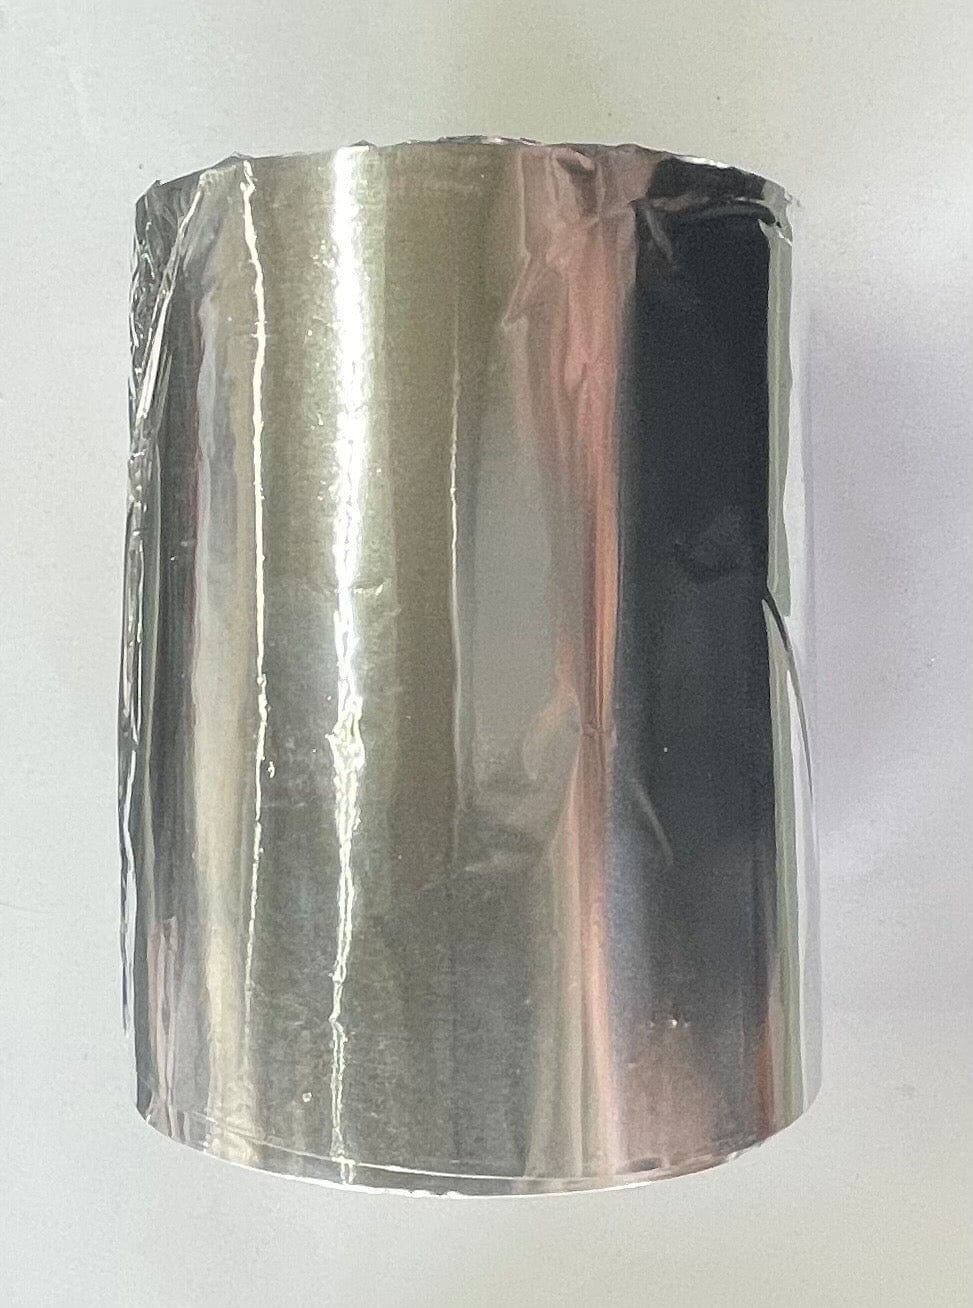 Highlighting Foil Roll Silver Light Smooth Texture 1640 ft / 5 lb Highlight Foil Roll